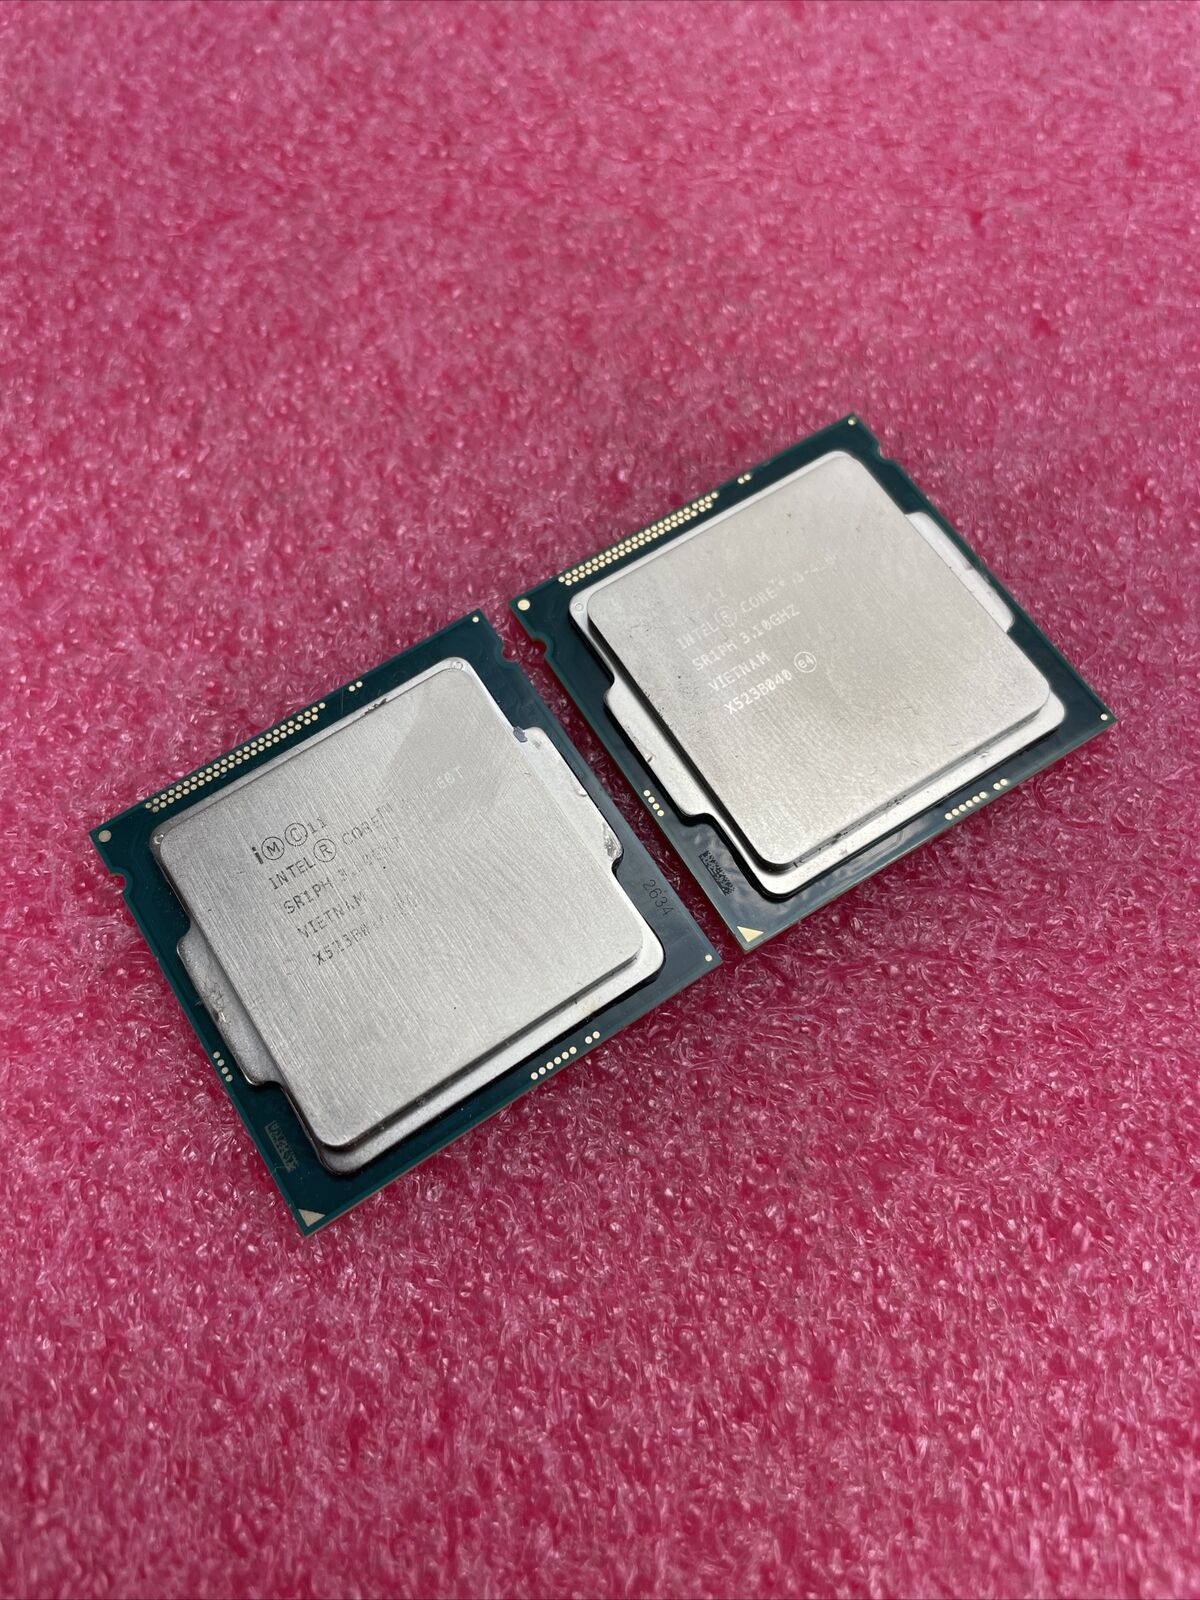 Intel Core i3-4160T SR1PH 3.1GHz Processor Lot of 2